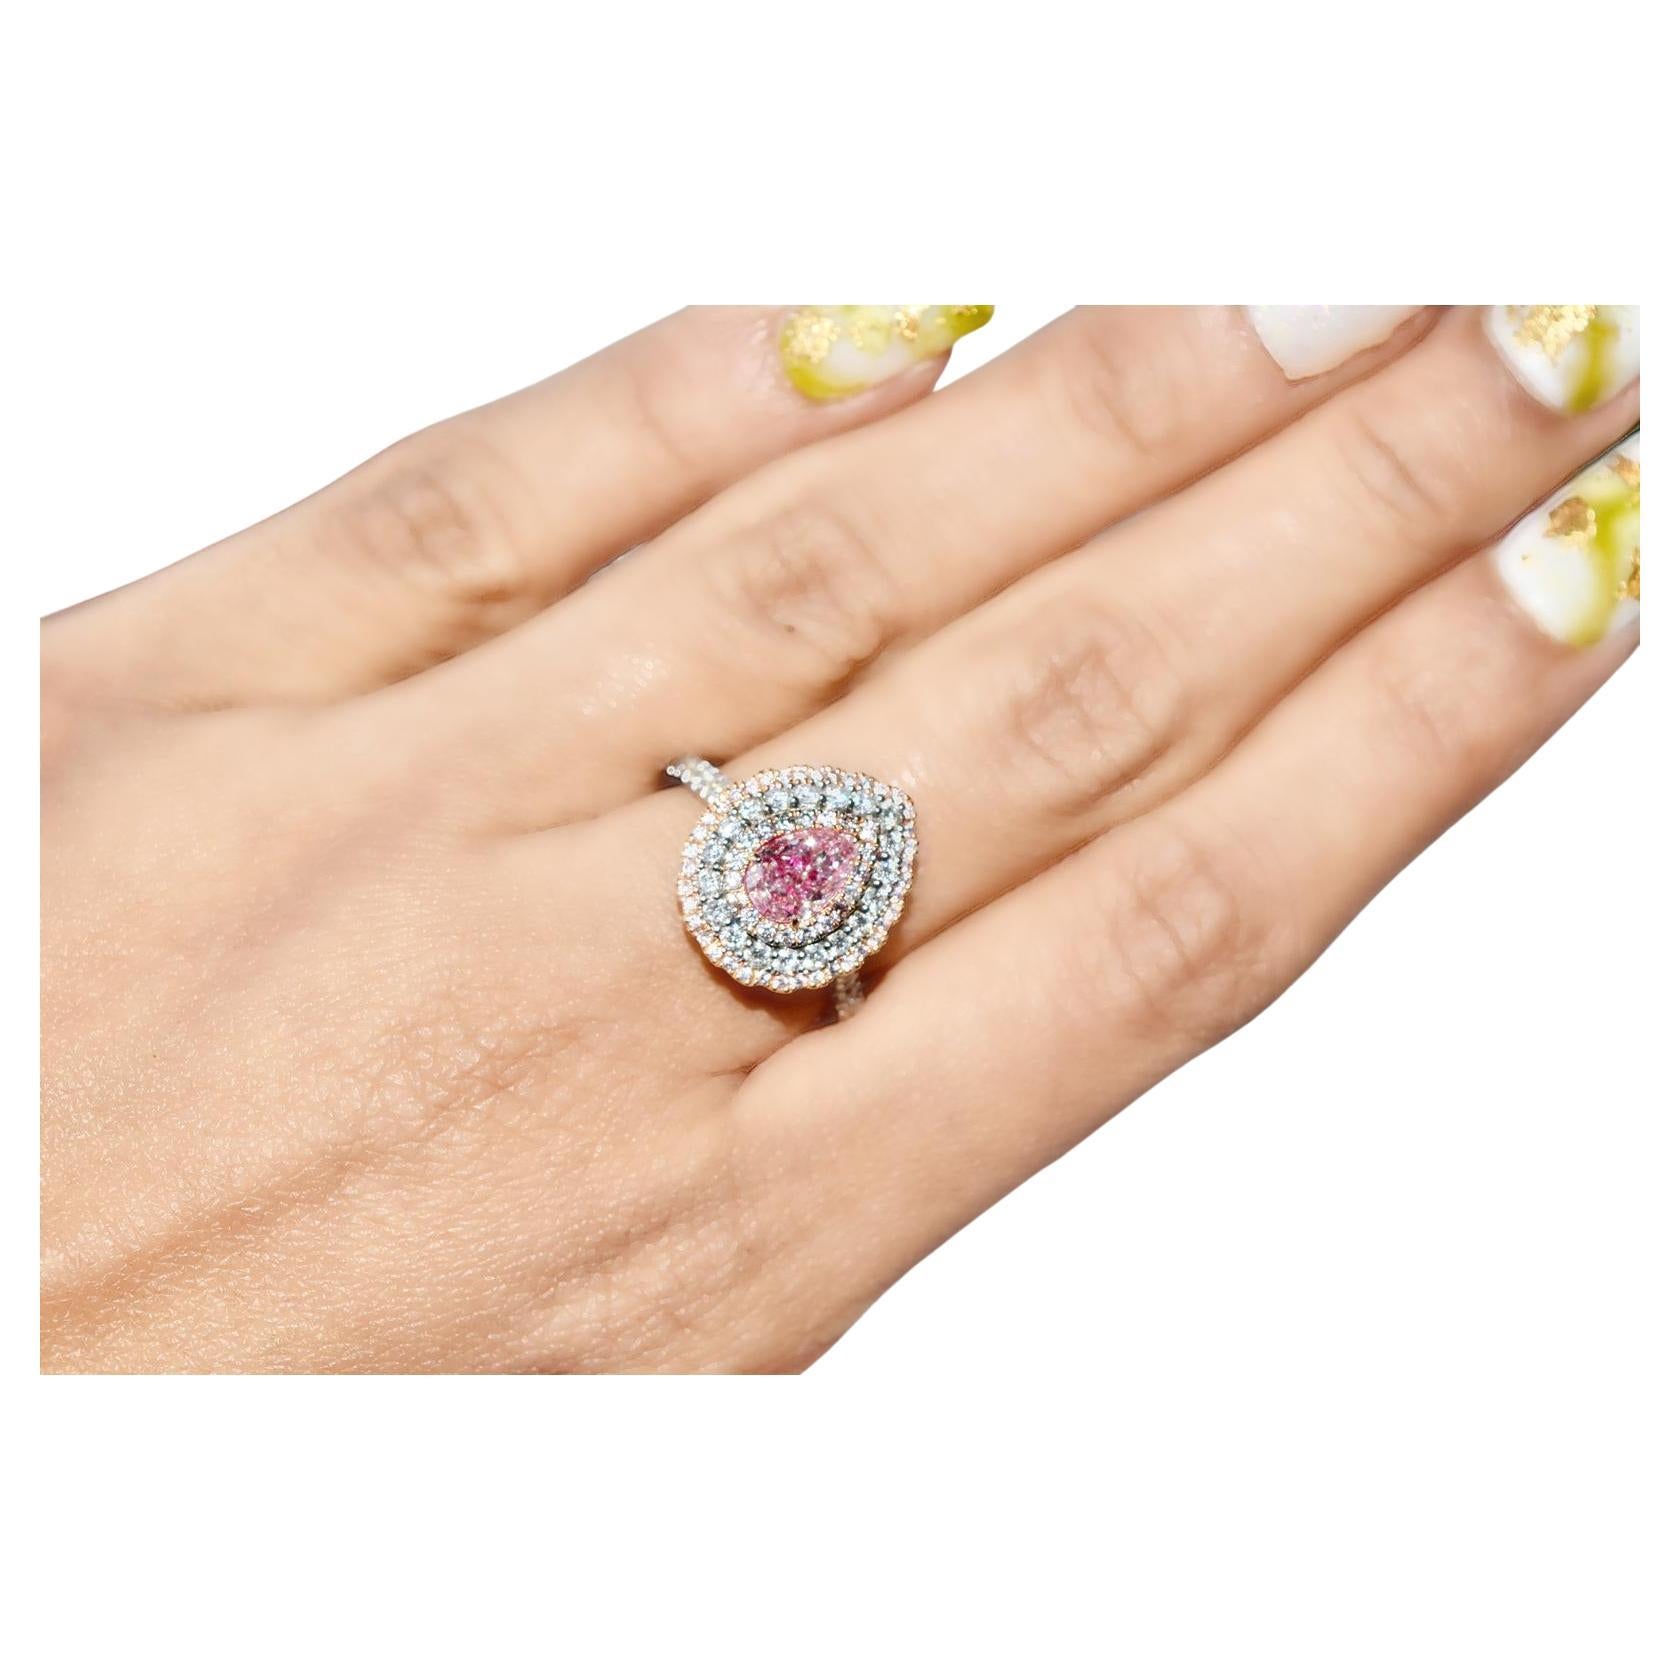 1.00 Carat Light Pinkish Brown Diamond Ring I1 Clarity GIA Certified